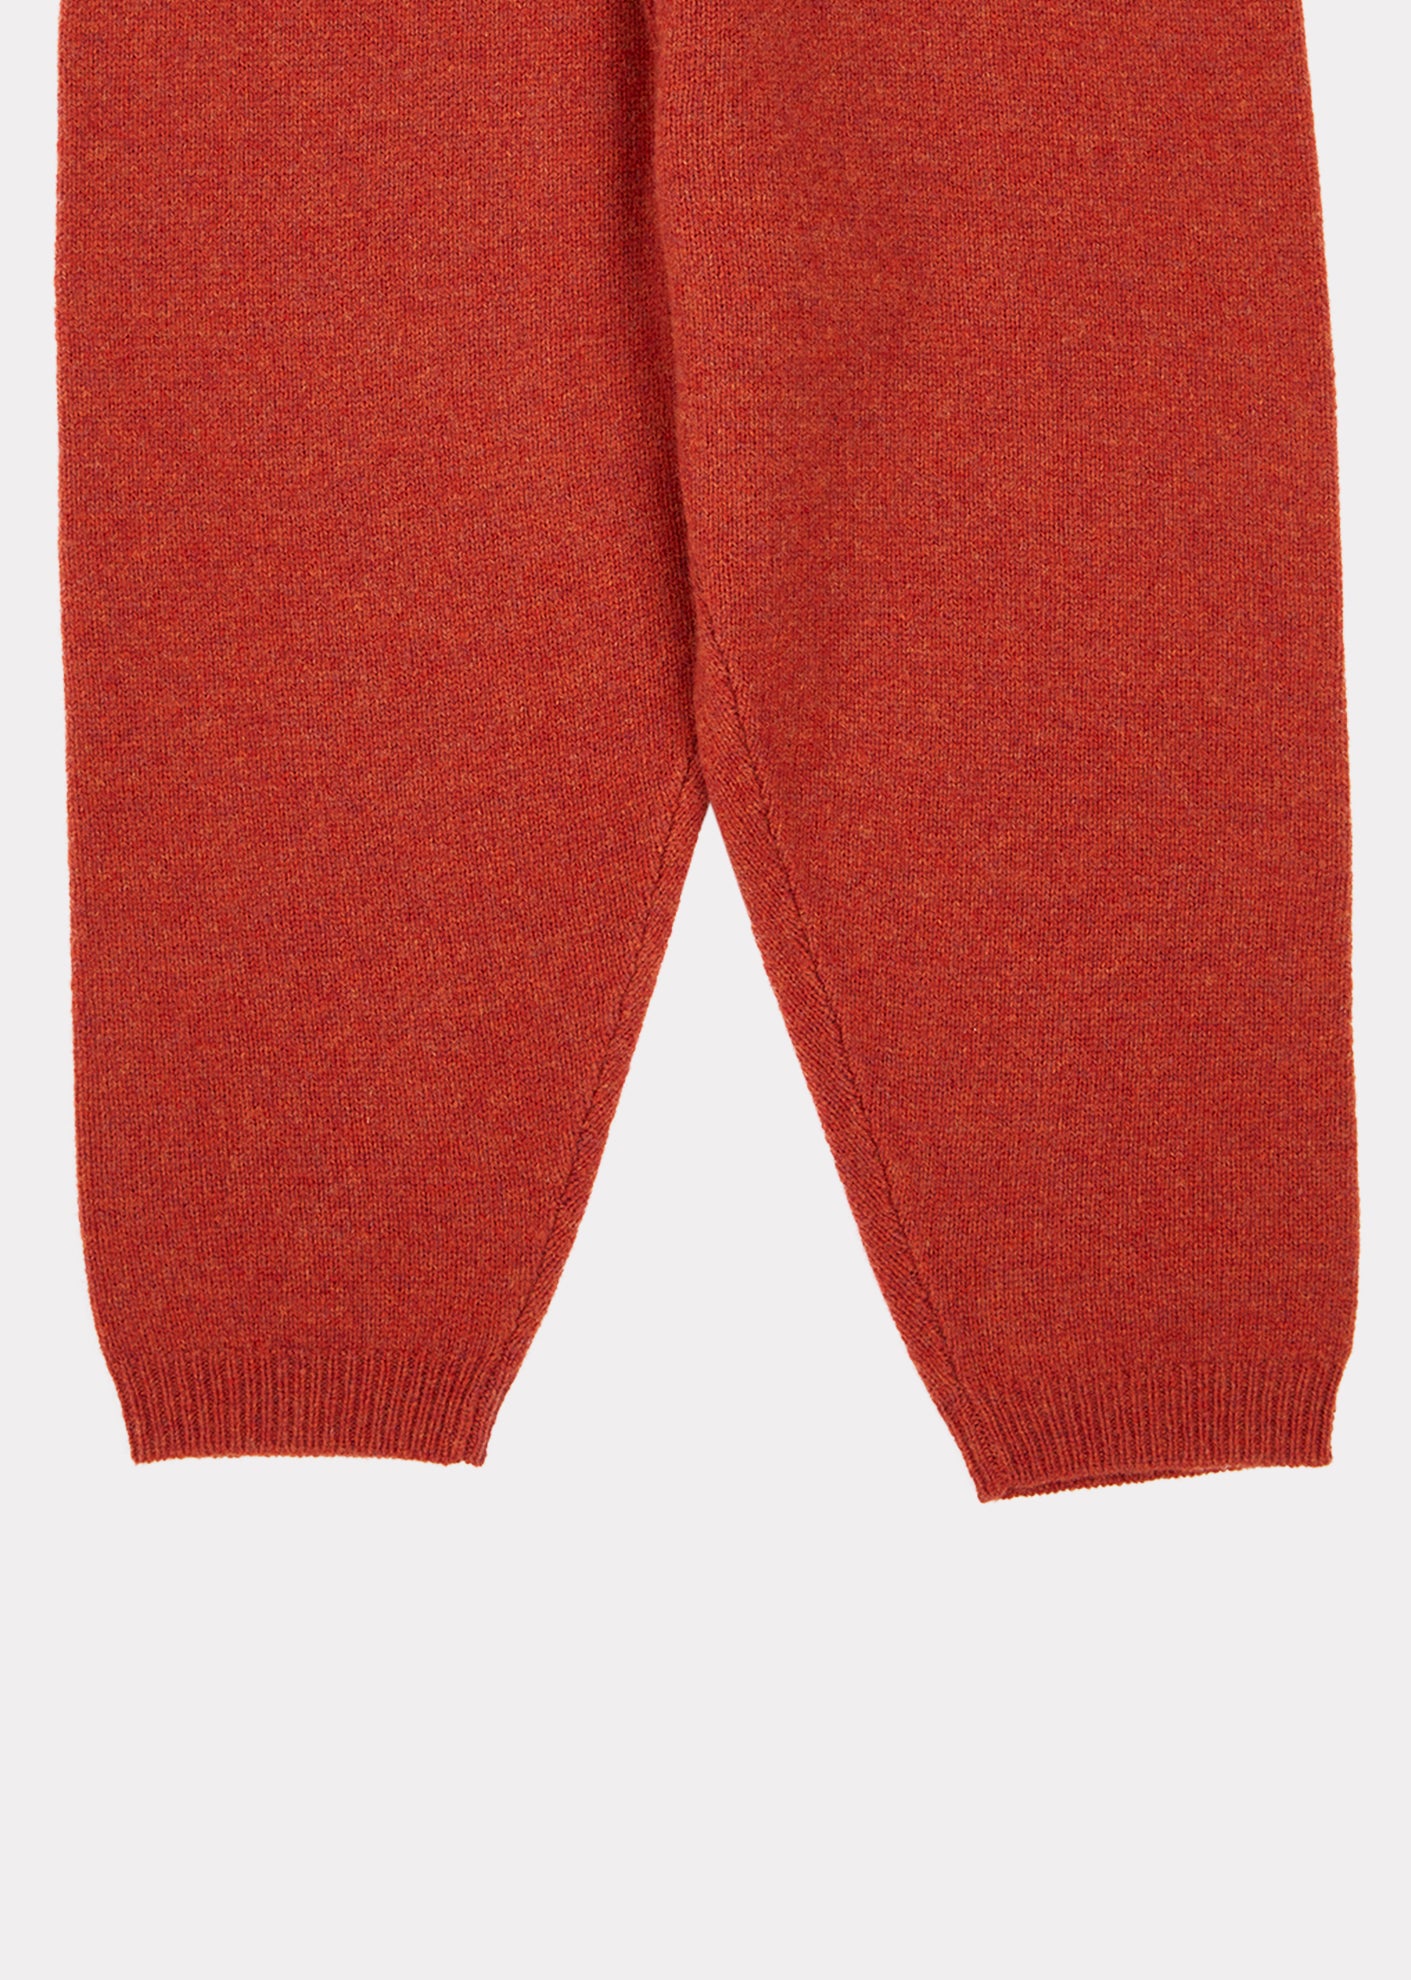 Boys & Girls Cinnamon Parakeet Trousers